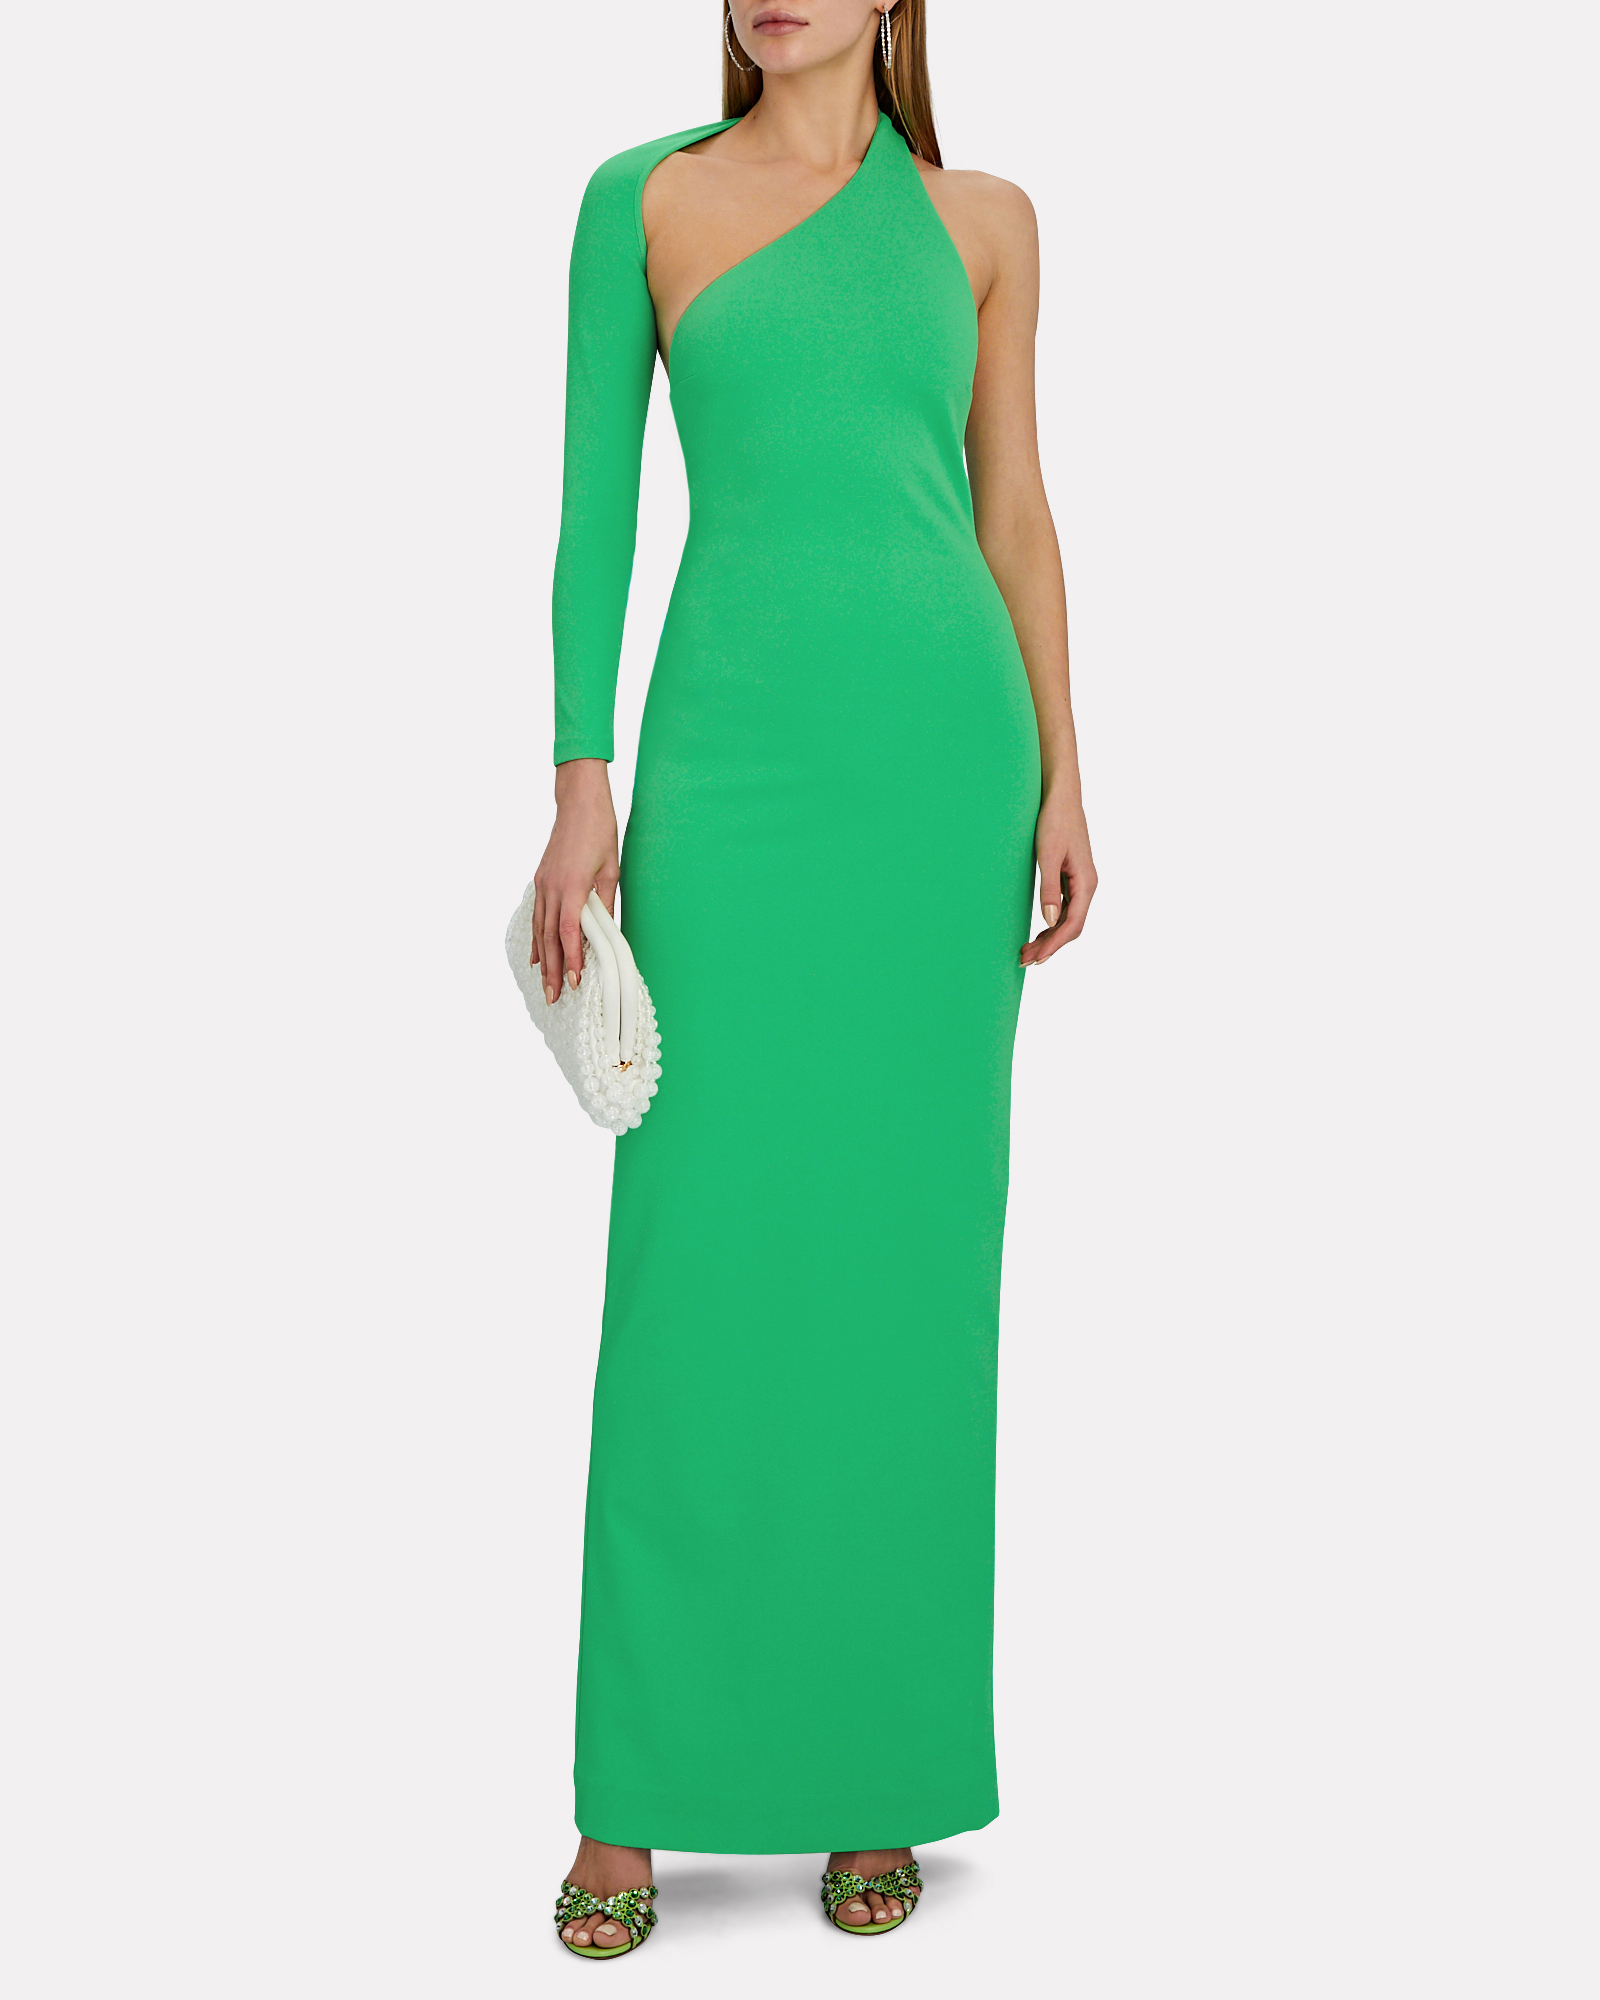 Solace London Saren Crepe Maxi Dress In Green | INTERMIX®